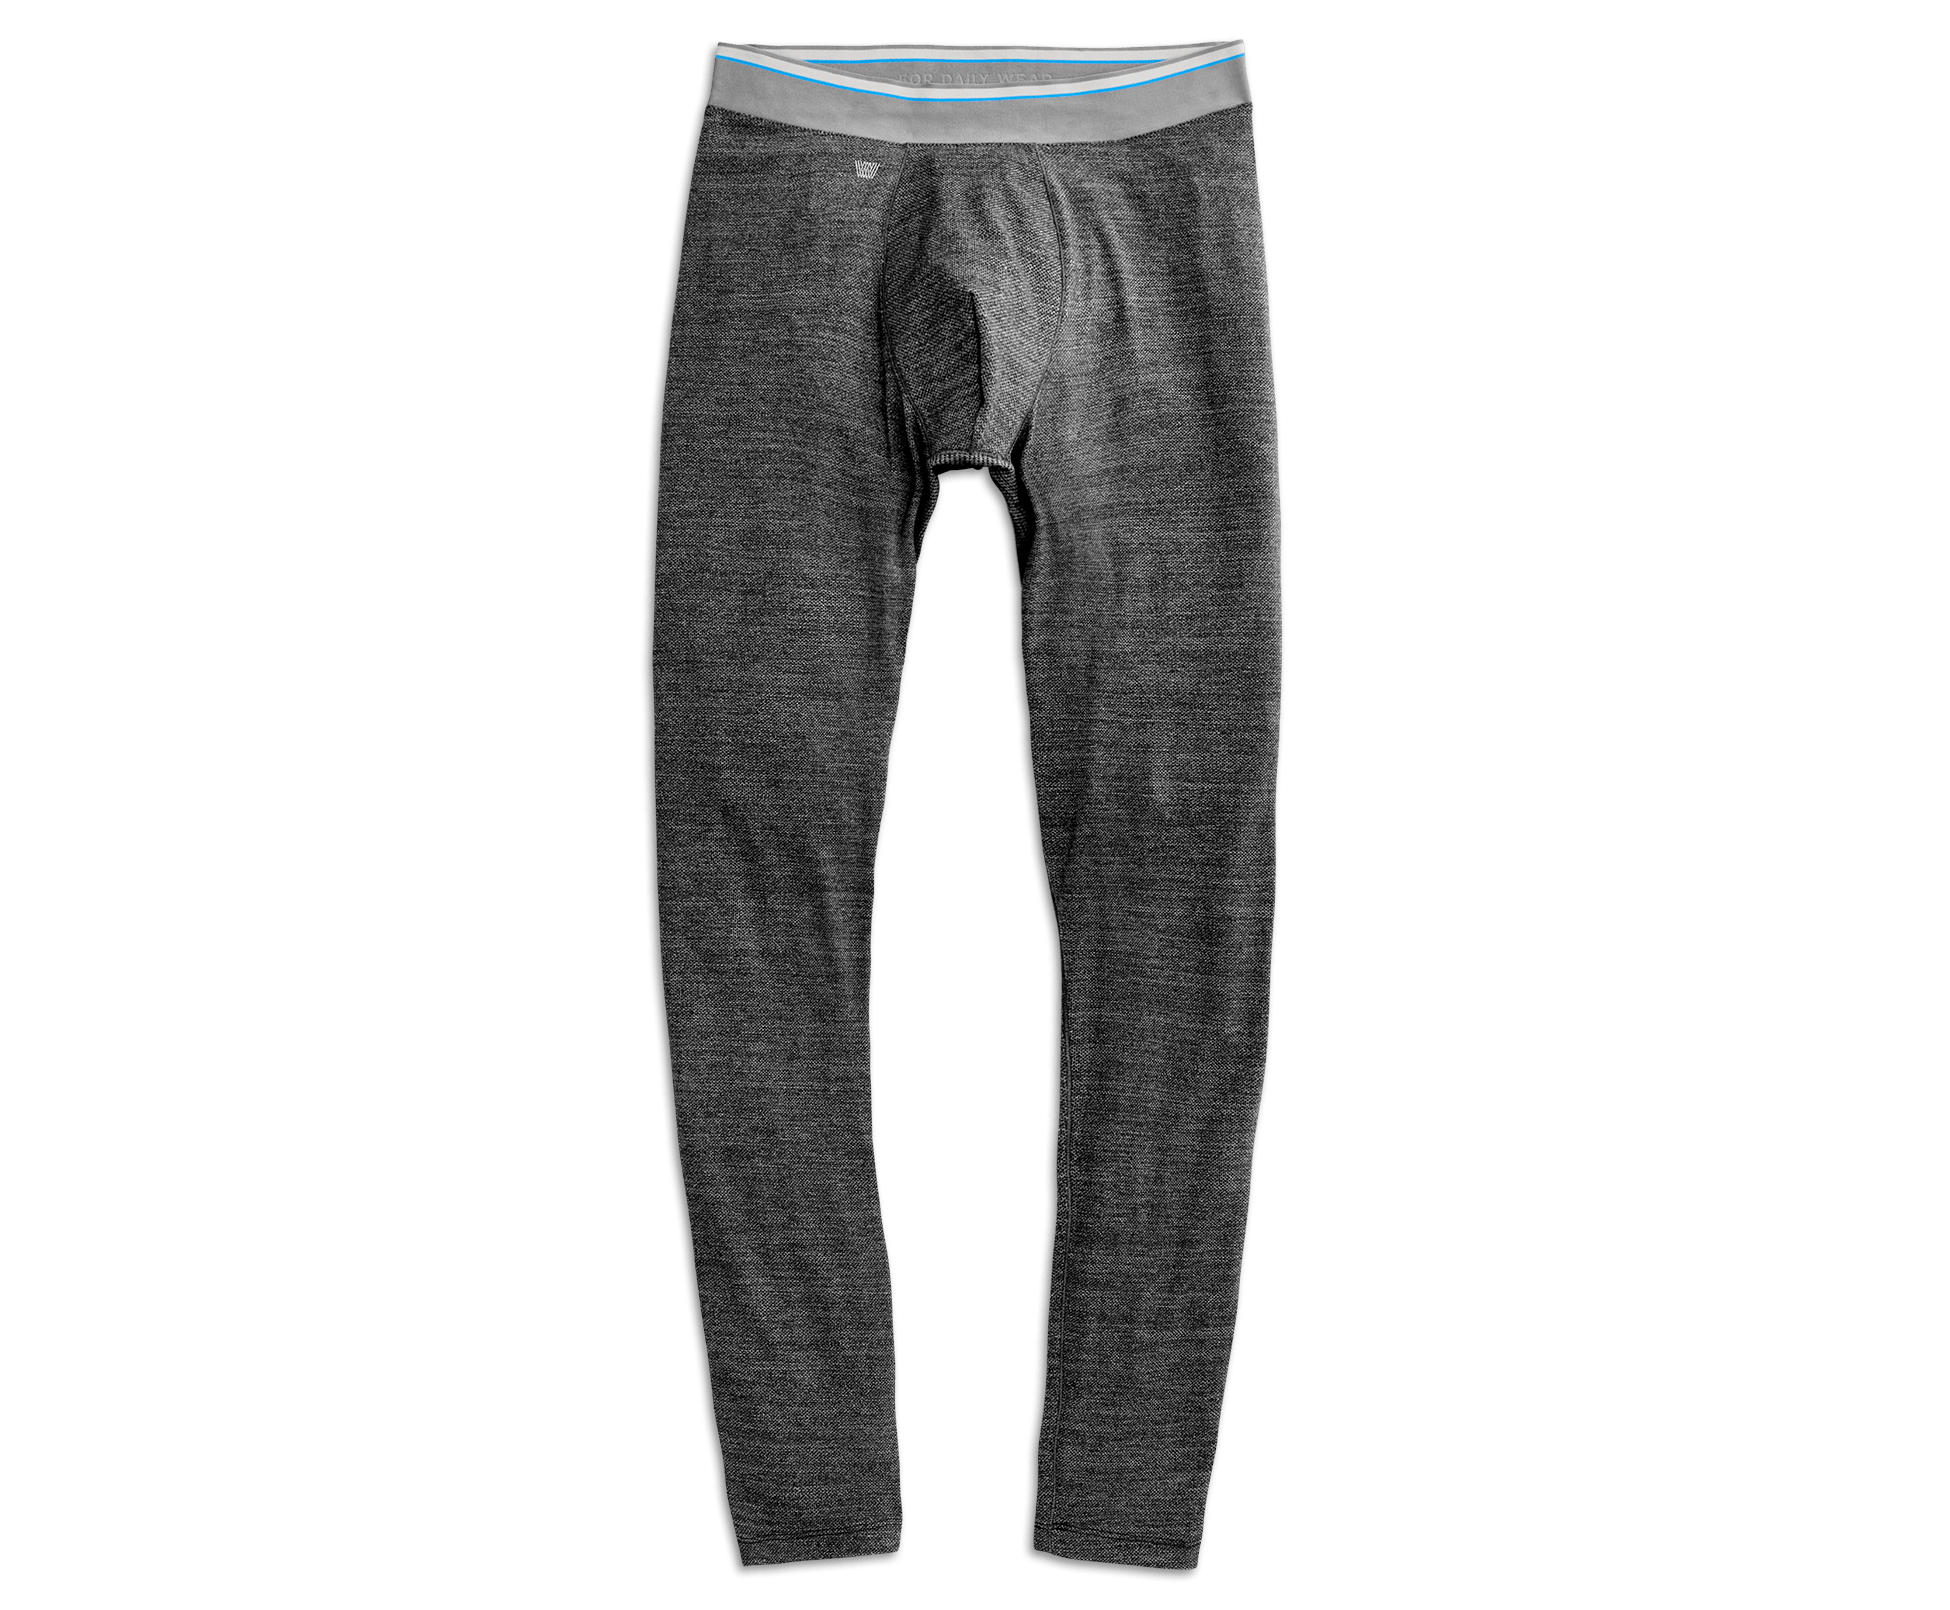 LJ&S Long Thermal Underwear in Black - Bottoms for Tall Men